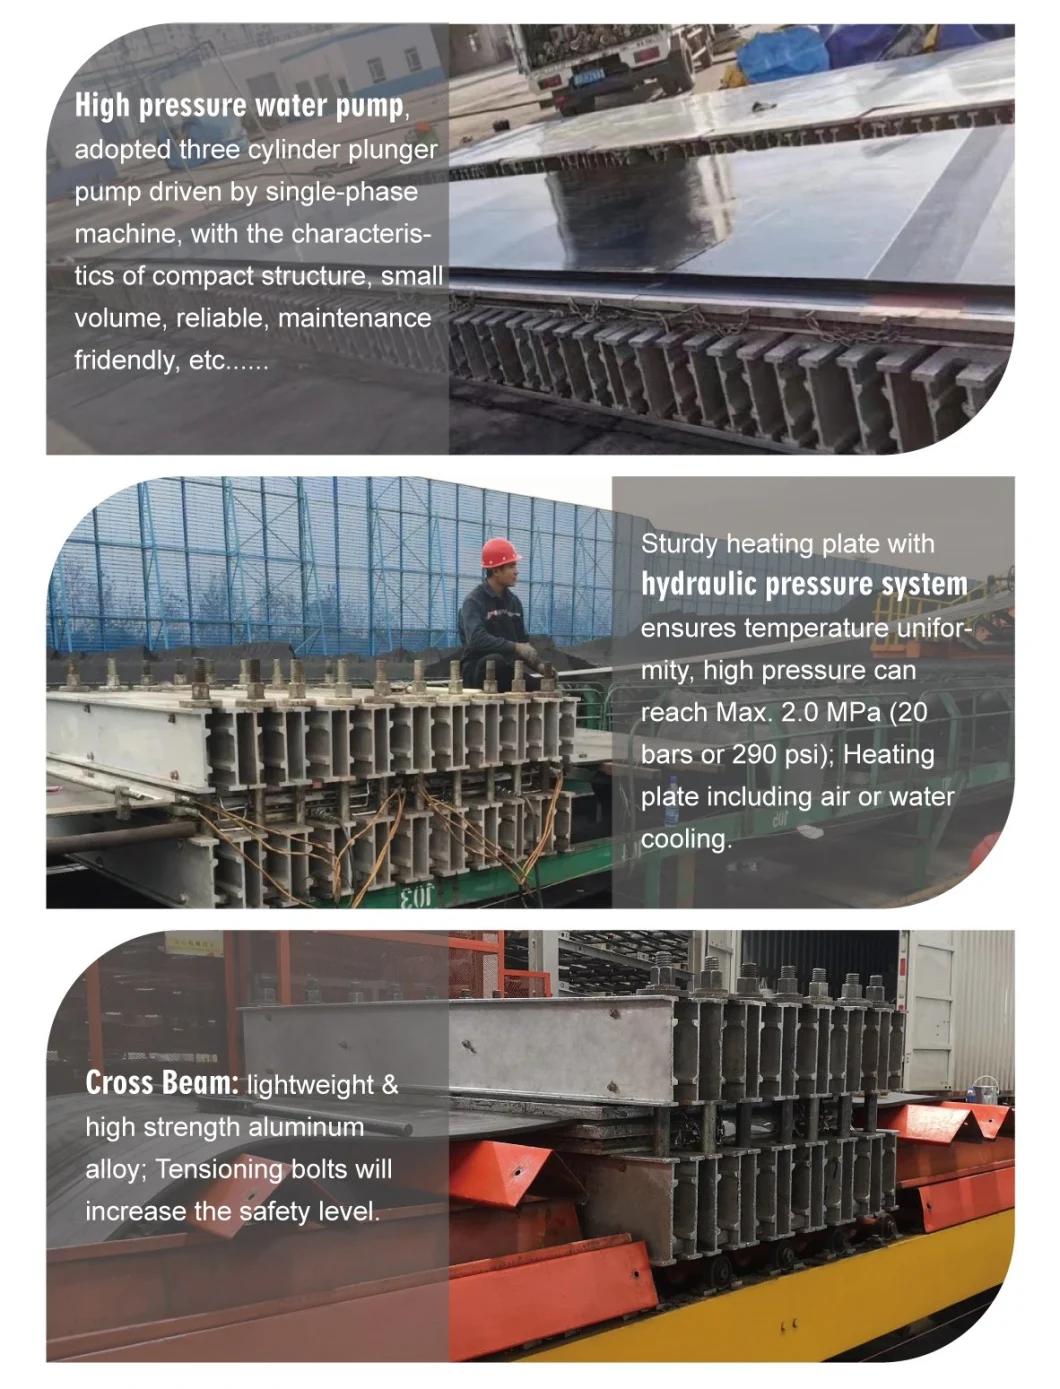 Hydraulic Conveyor Belt Vulcanizer Joint and Repair Hot Vulcanizing Press